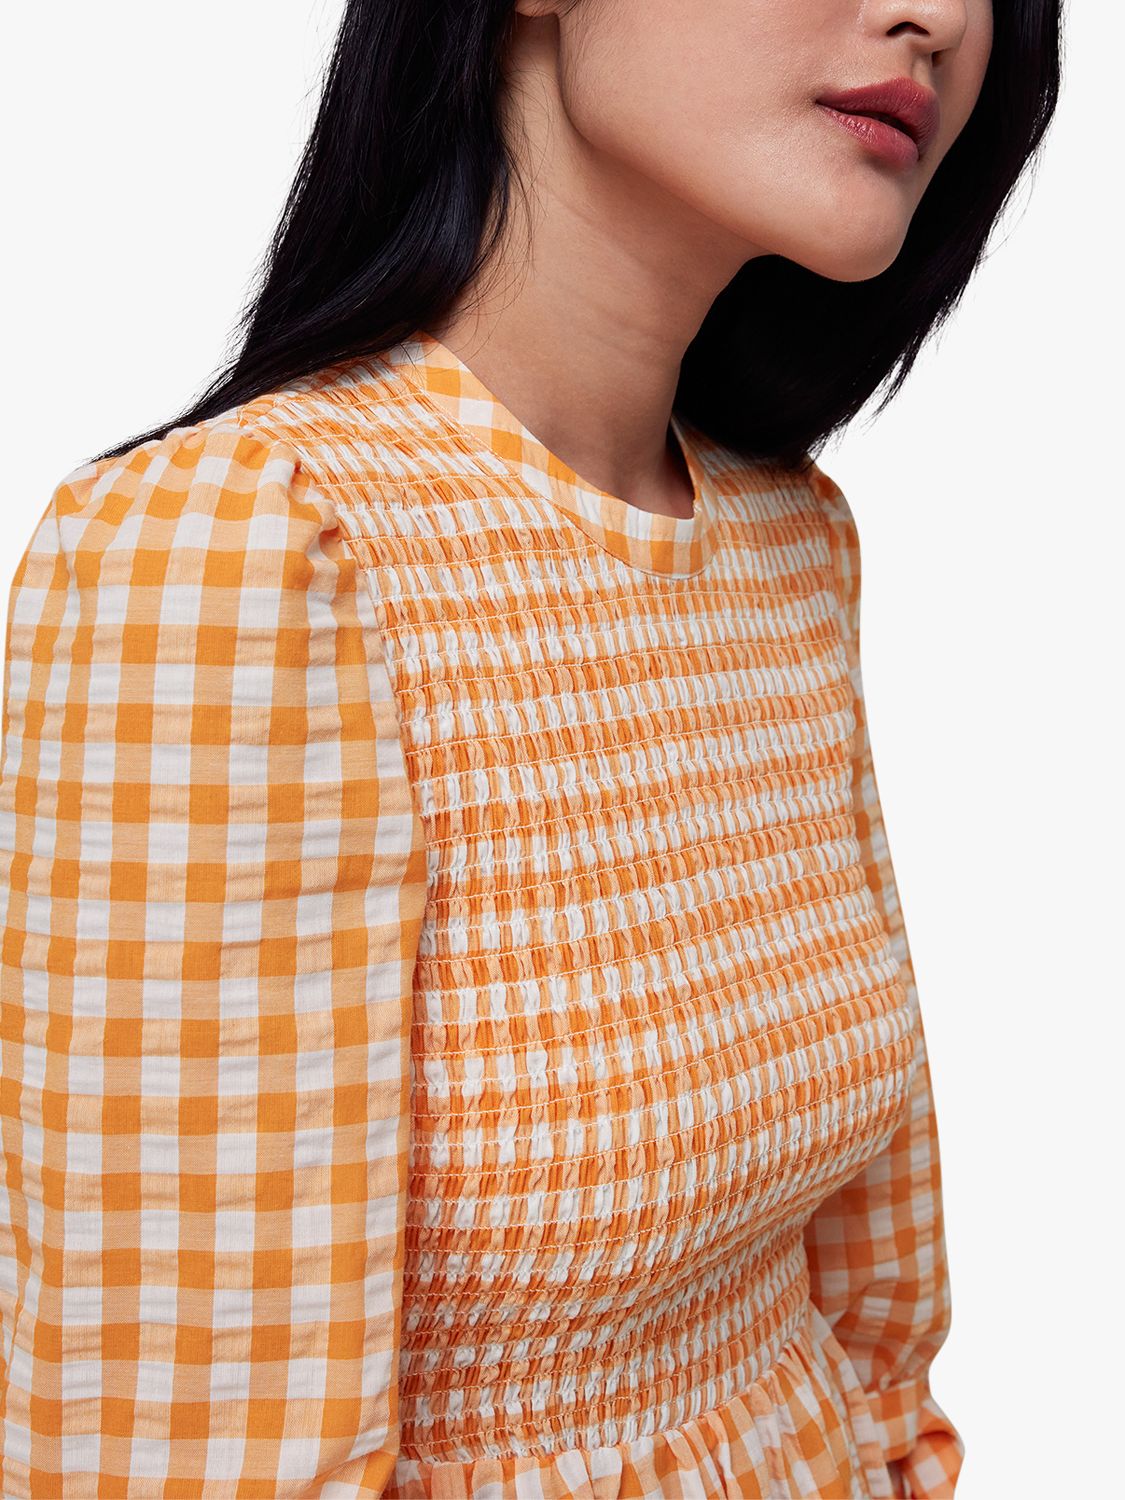 Whistles Gingham Check Shirred Midi Dress, Orange/Multi, 6